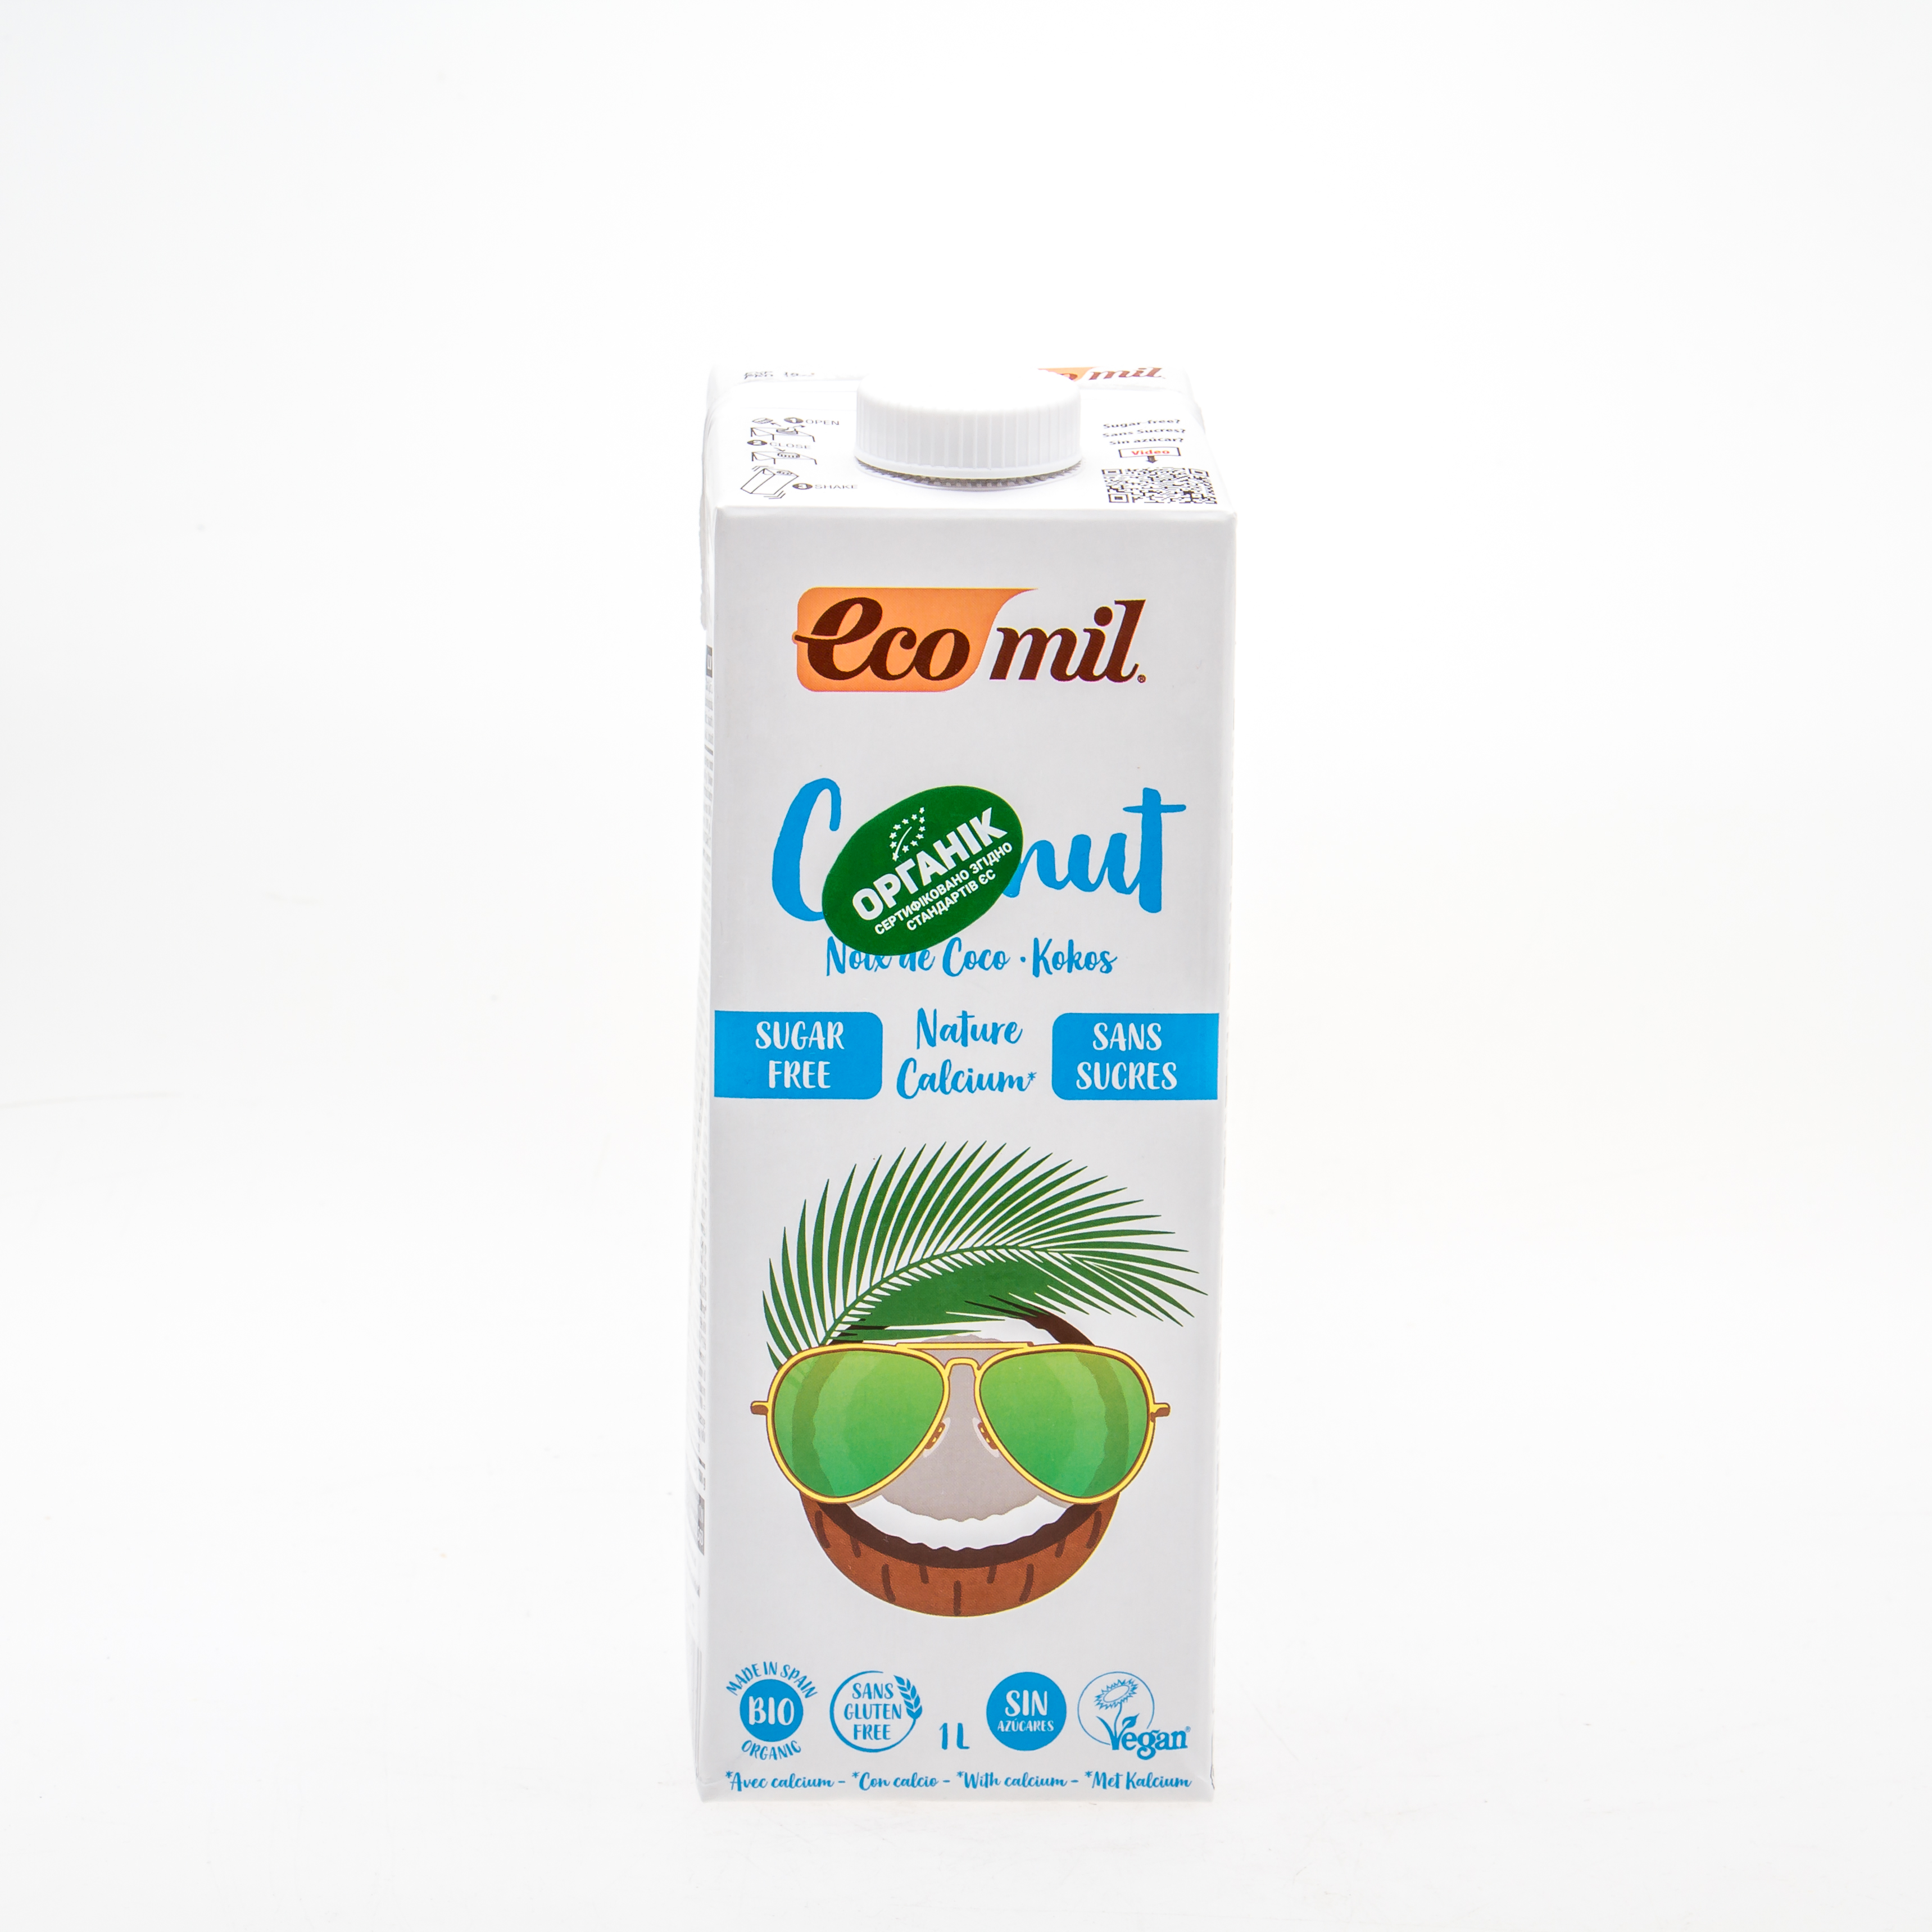 Органічне рослинне молоко з кокосу з кальцієм, 1 л - купить в интернет-магазине Юнимед